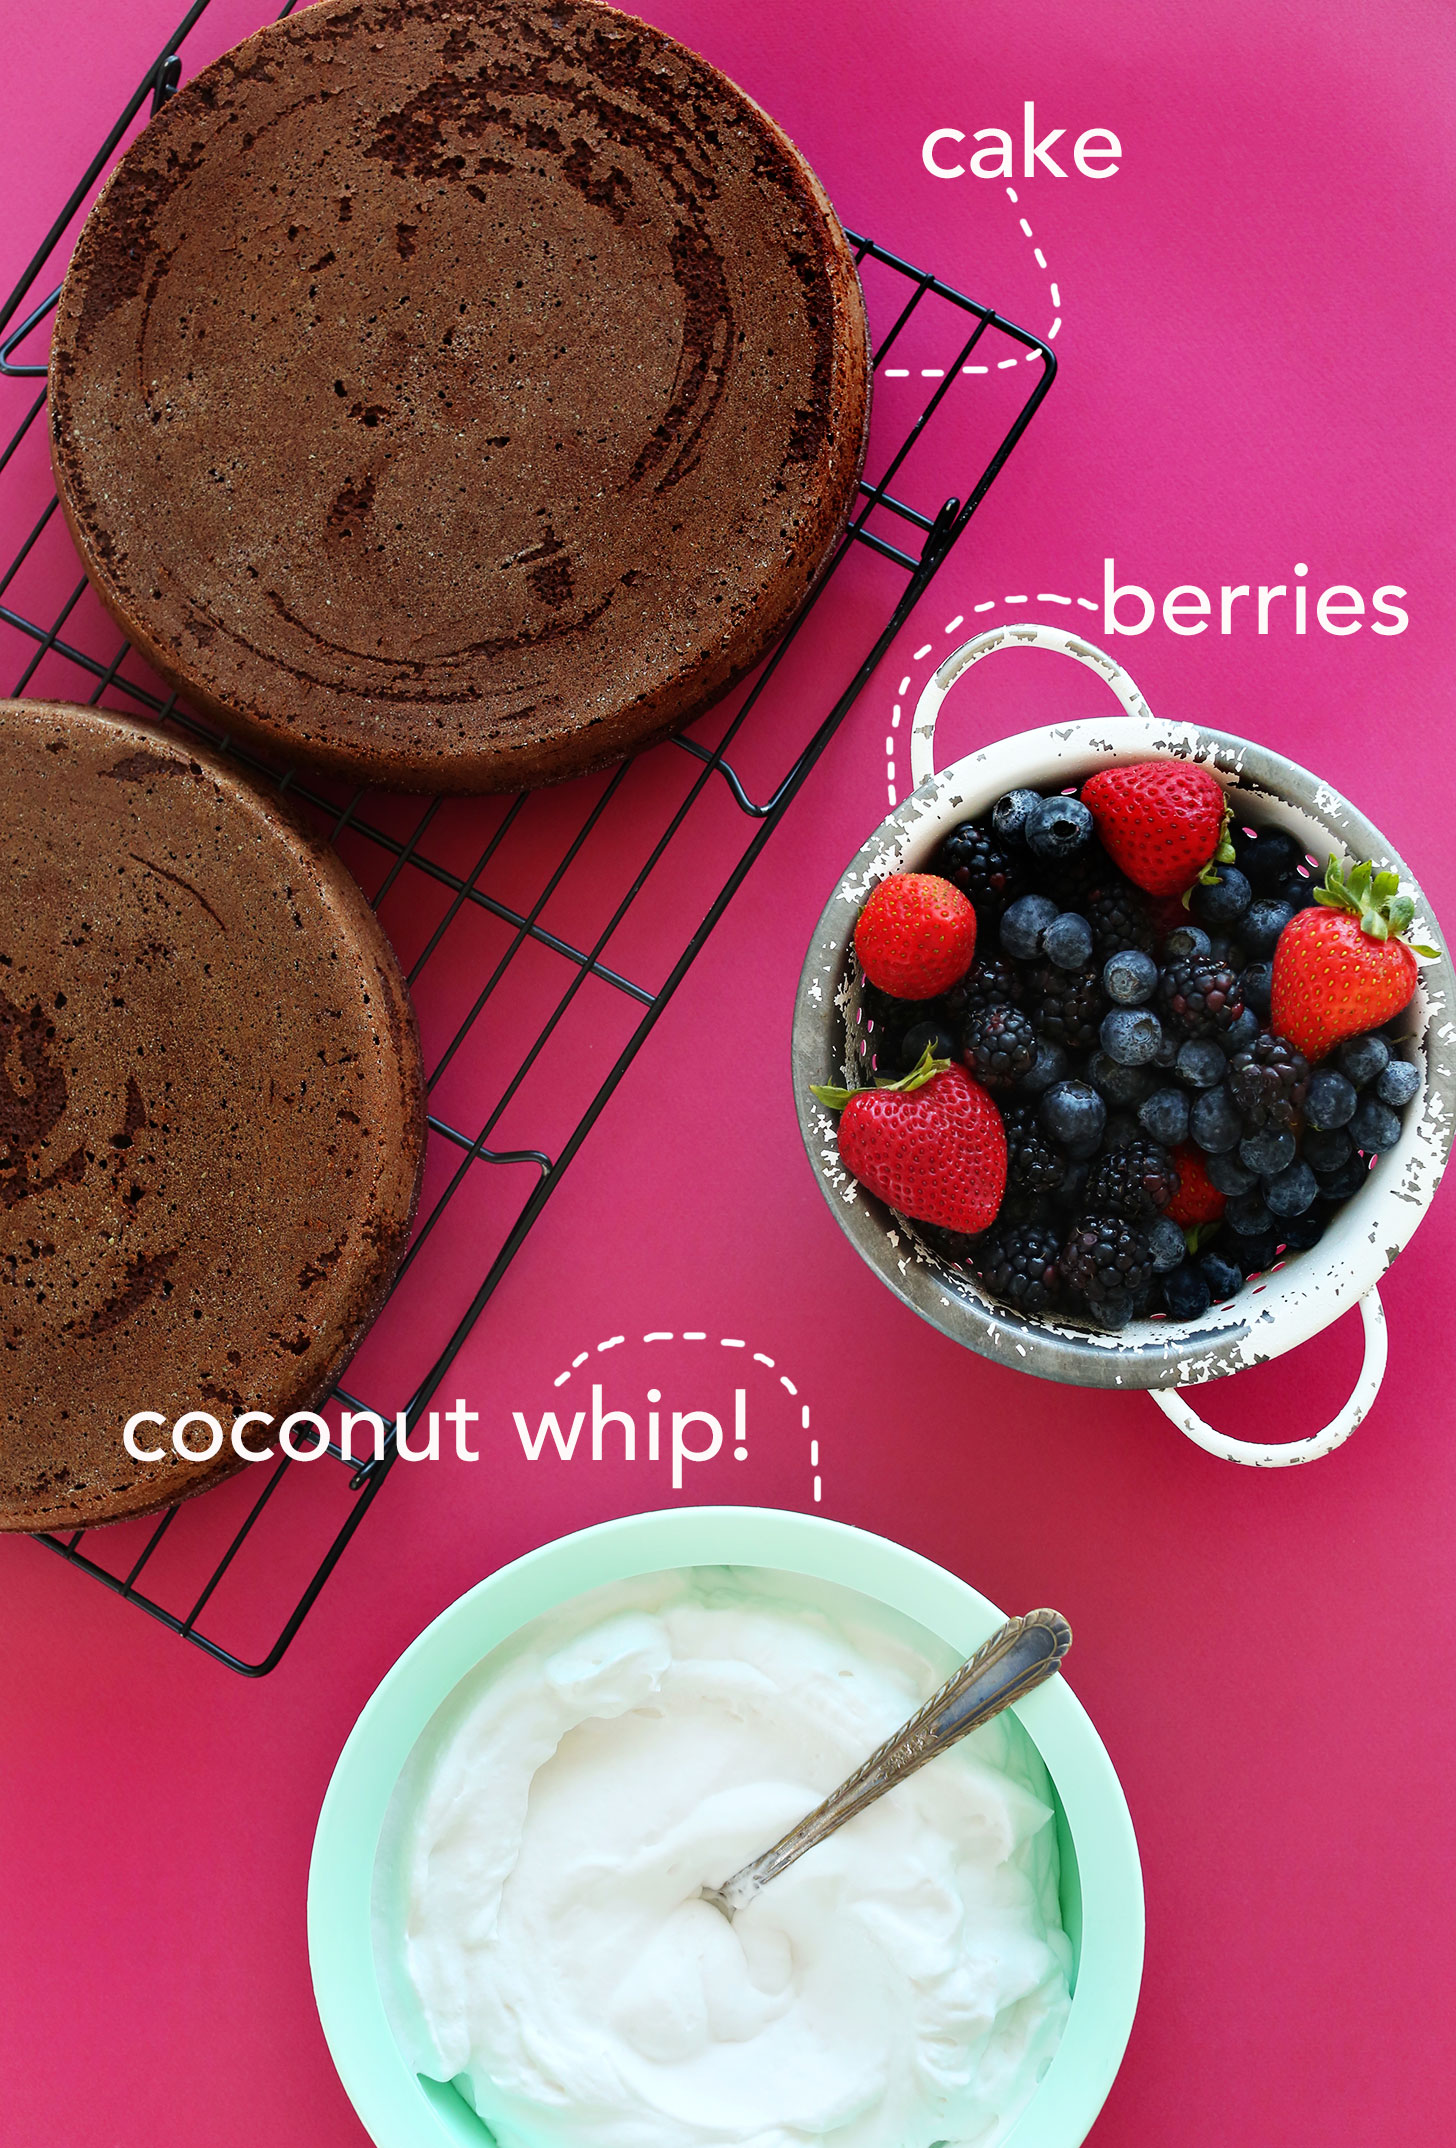 Coconut whip, fresh berries, and layers of cake for making homemade gluten-free vegan birthday cake